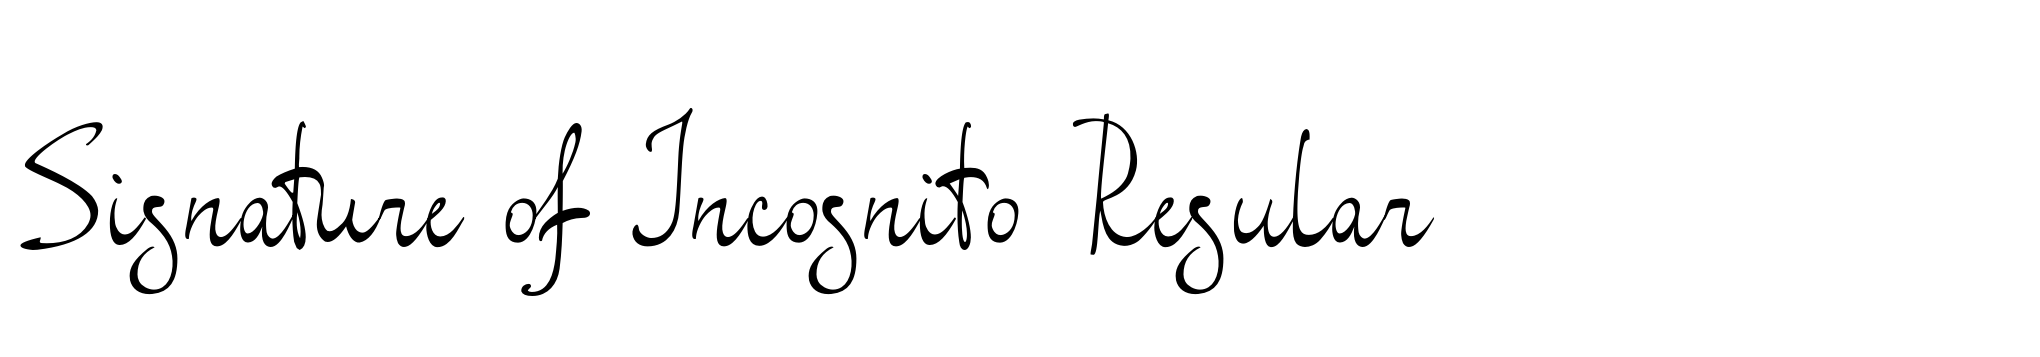 Signature of Incognito Regular image